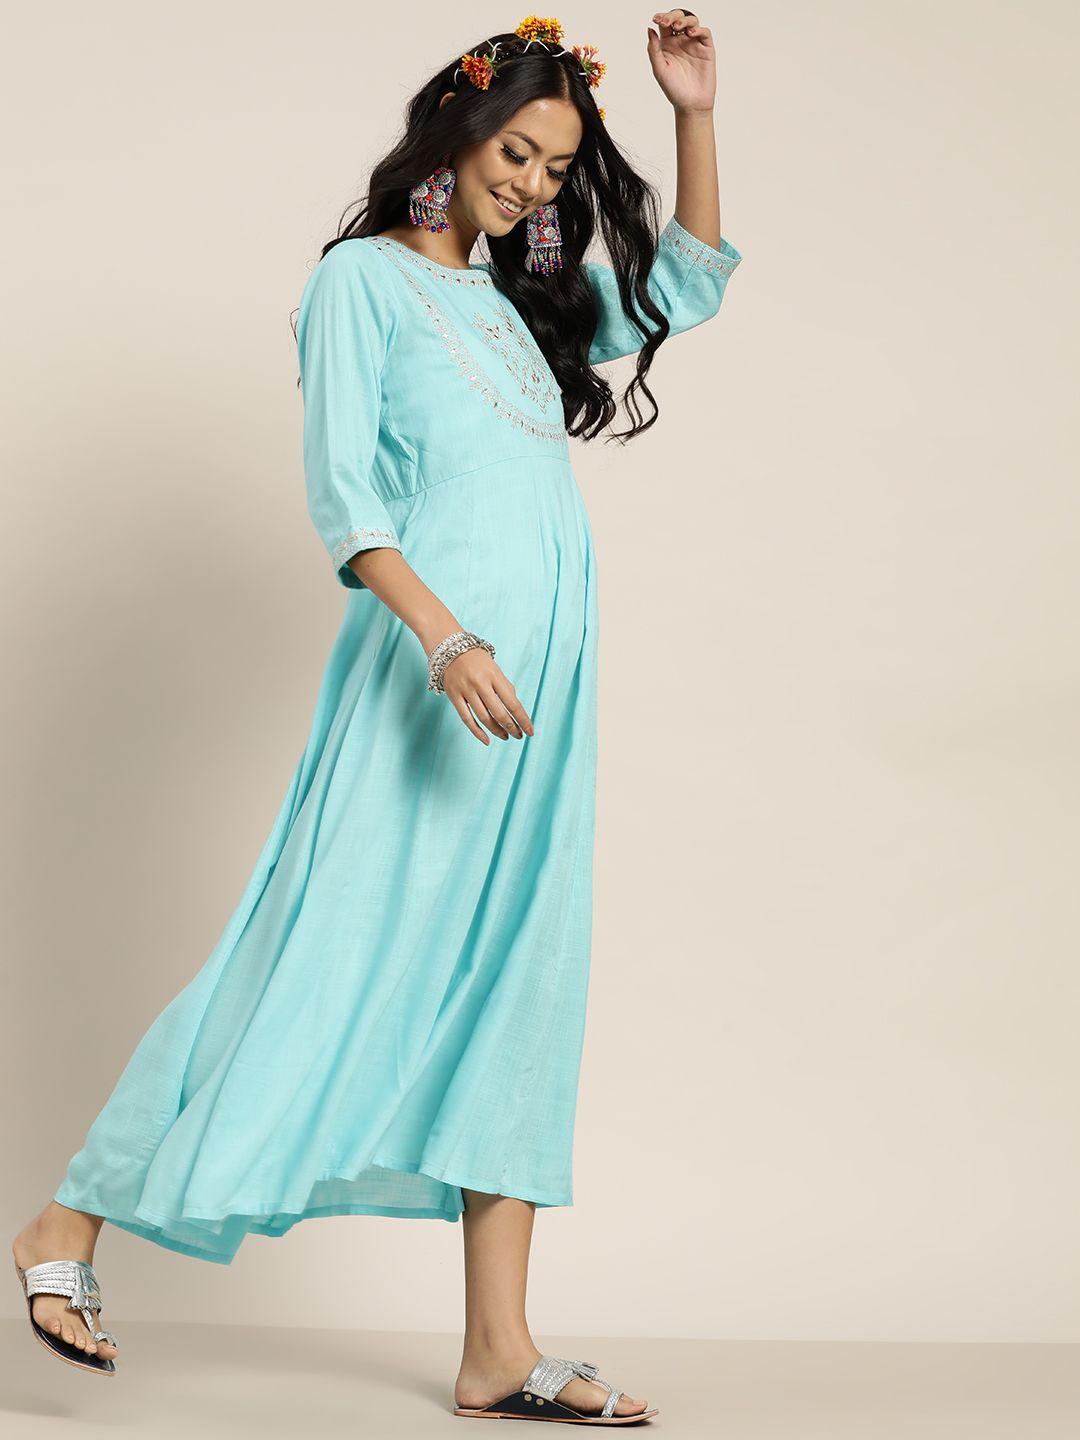 shae by sassafras women blue embroidered a-line dress